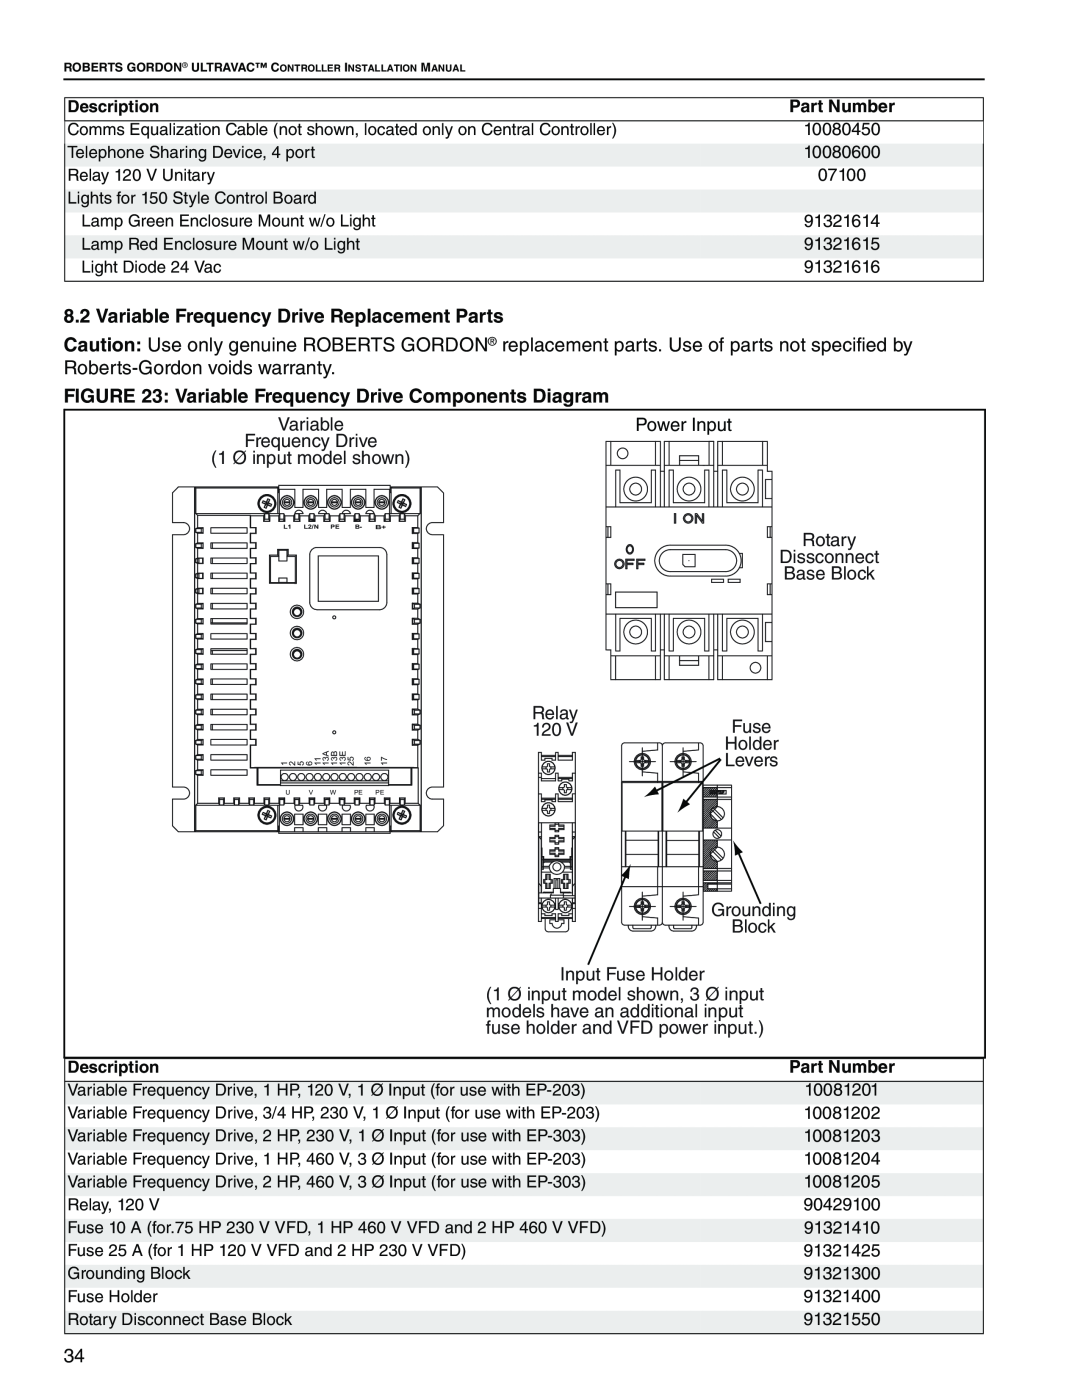 Roberts Gorden NEMA 4 Variable Frequency Drive Replacement Parts, Variable Frequency Drive 1 Ø input model shown, Relay 